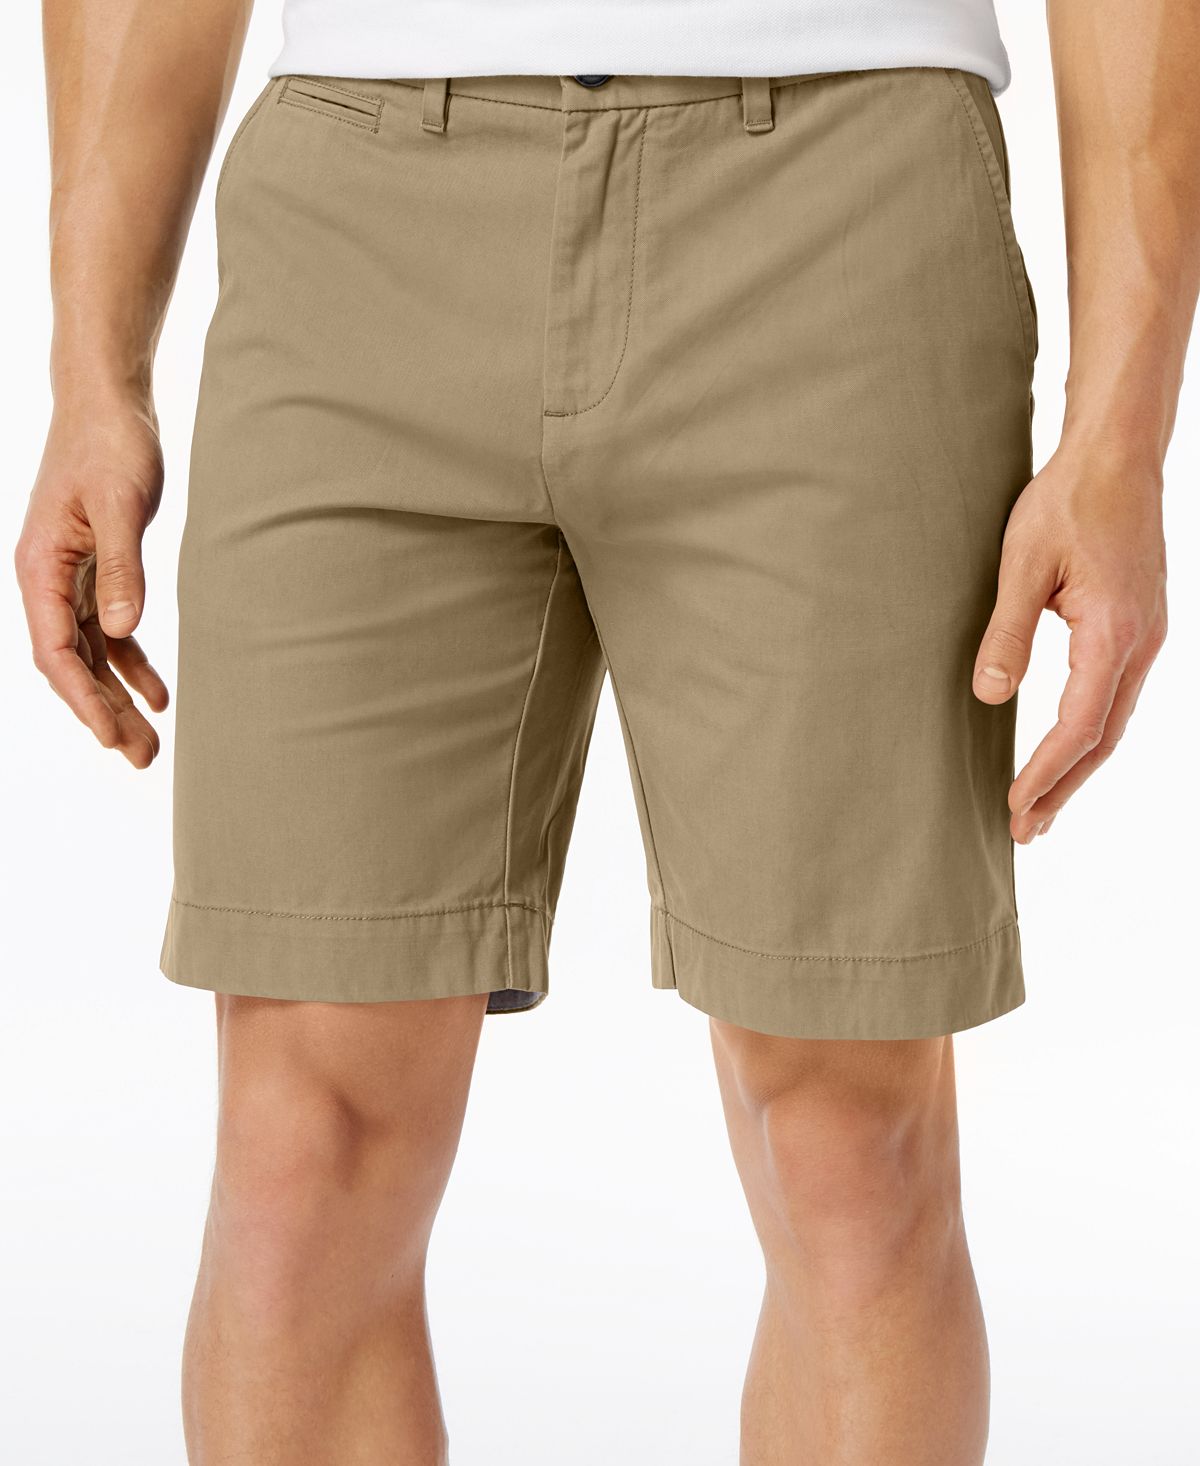 Мужские эластичные шорты th flex 9 дюймов Tommy Hilfiger